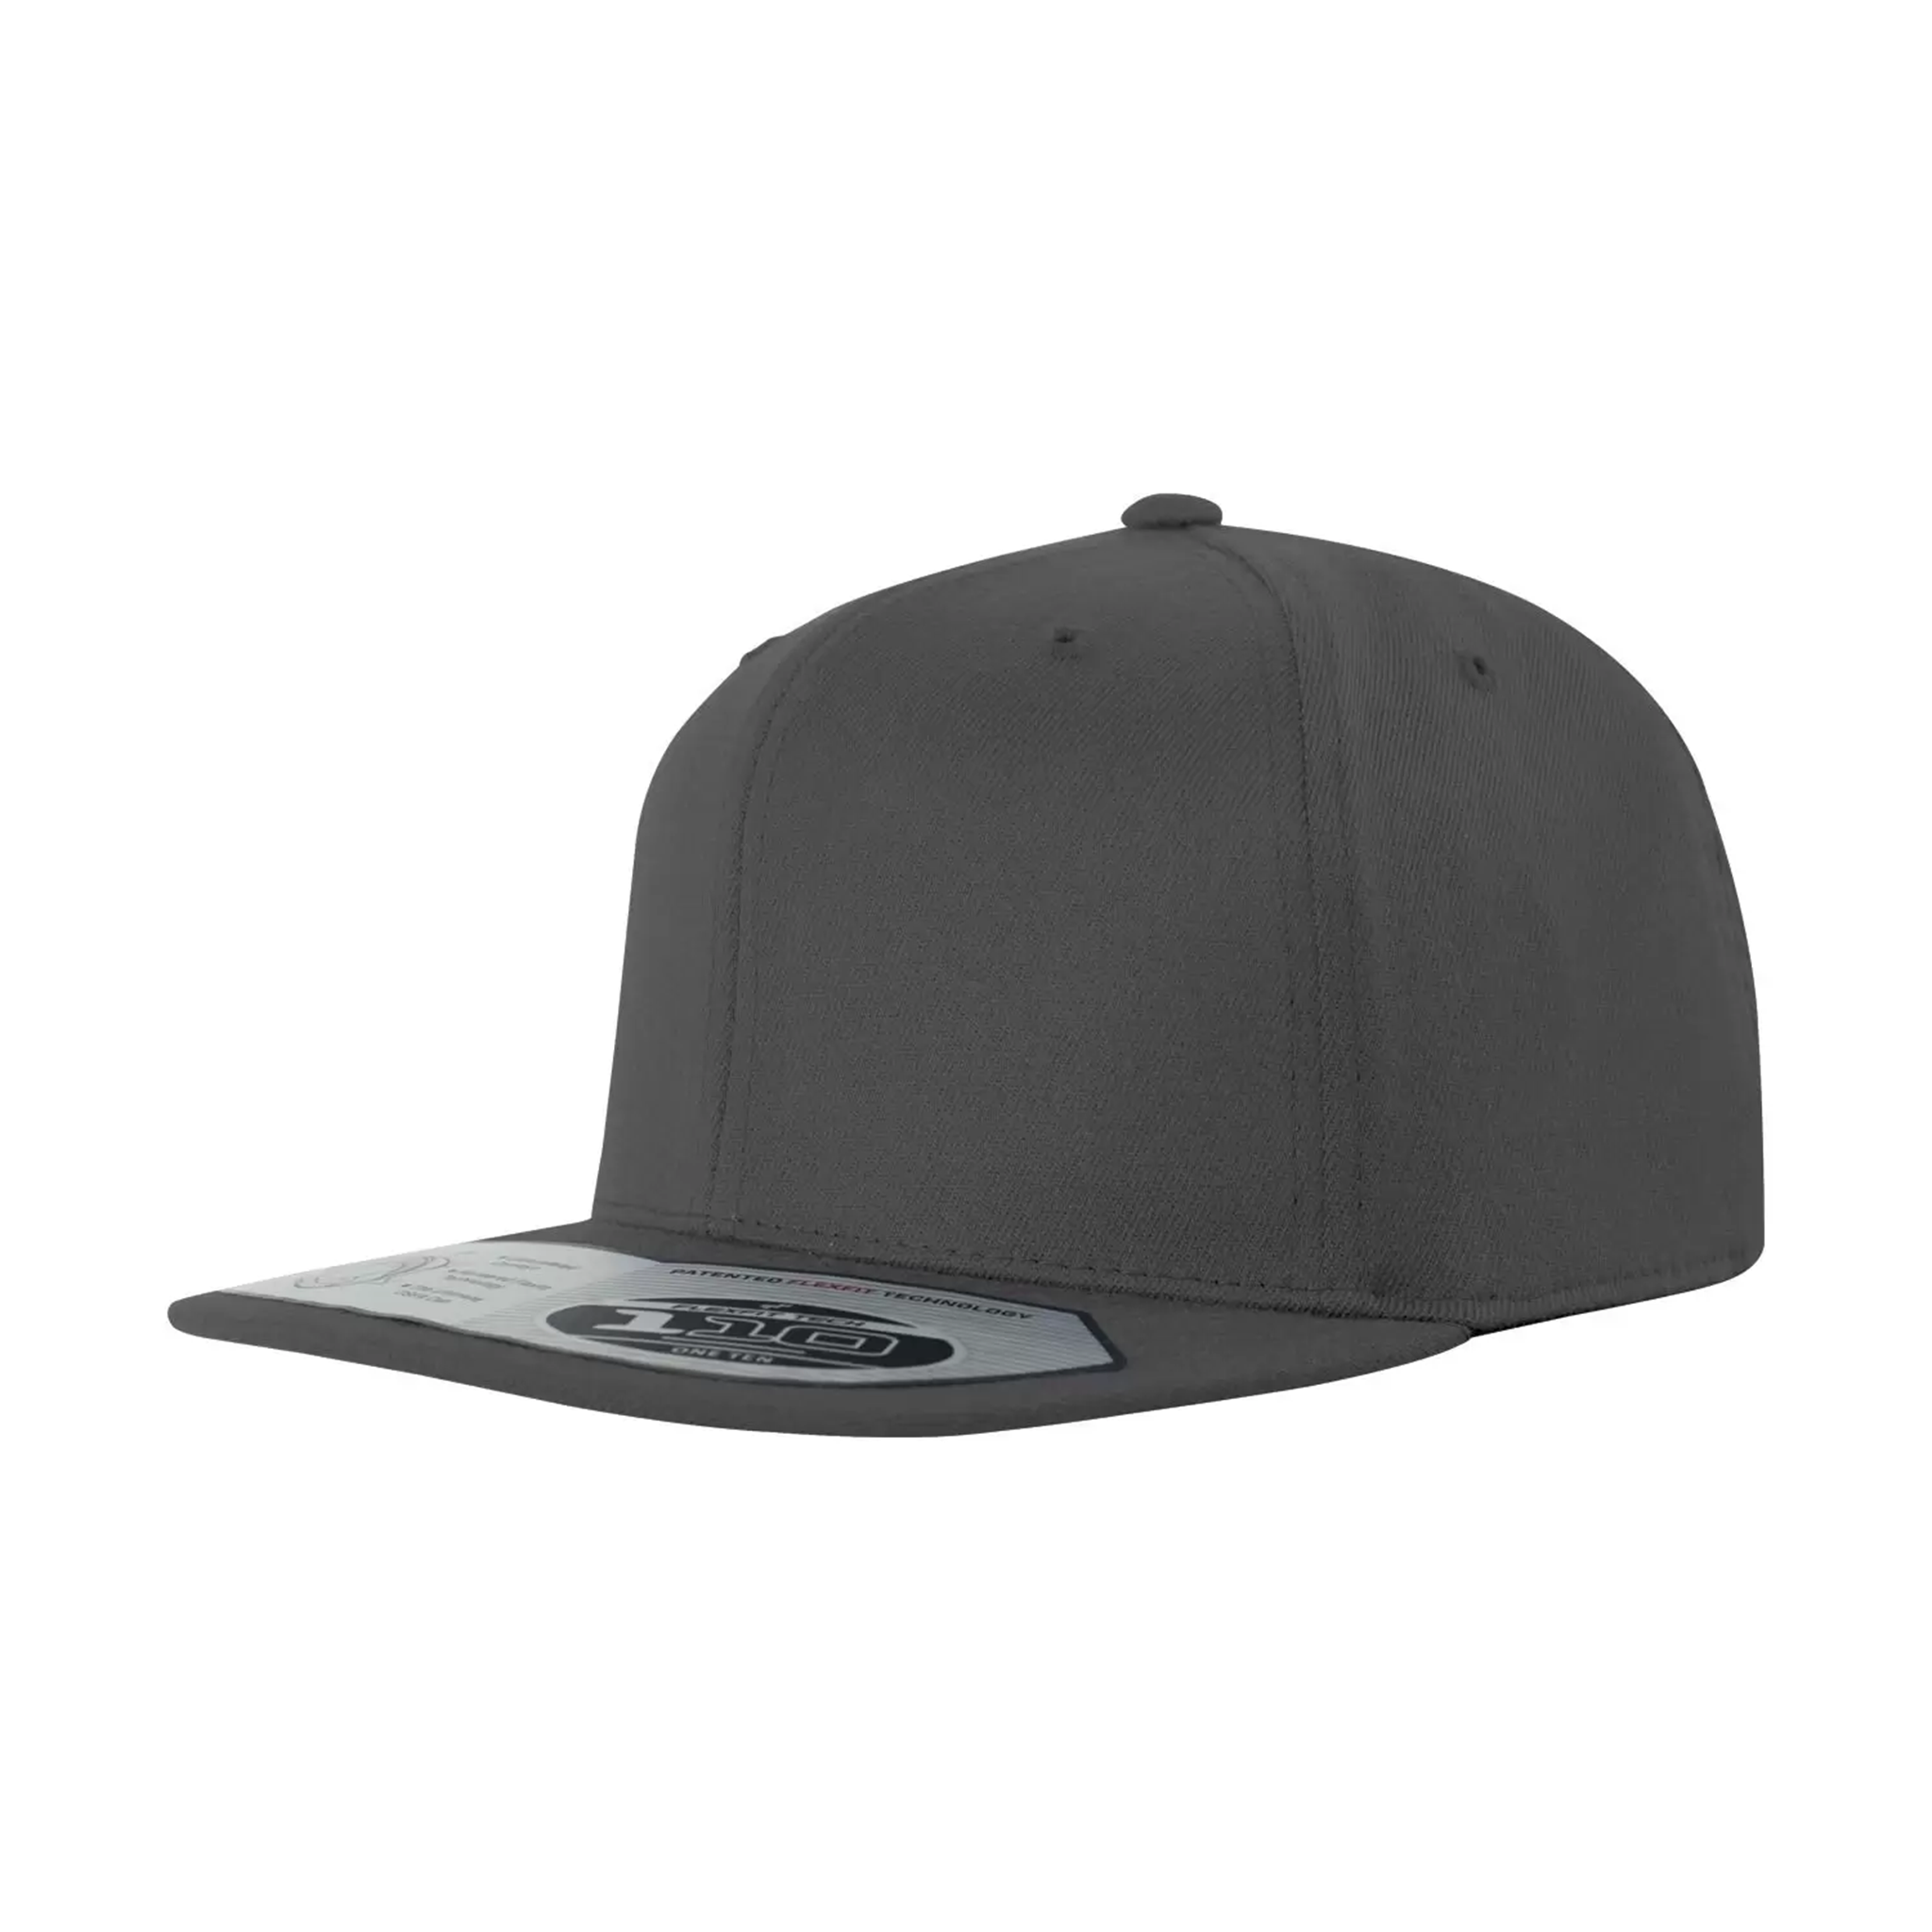 ATC Flexfit Snapback Cap - Adult Unisex One Size Fits All - Dark Grey